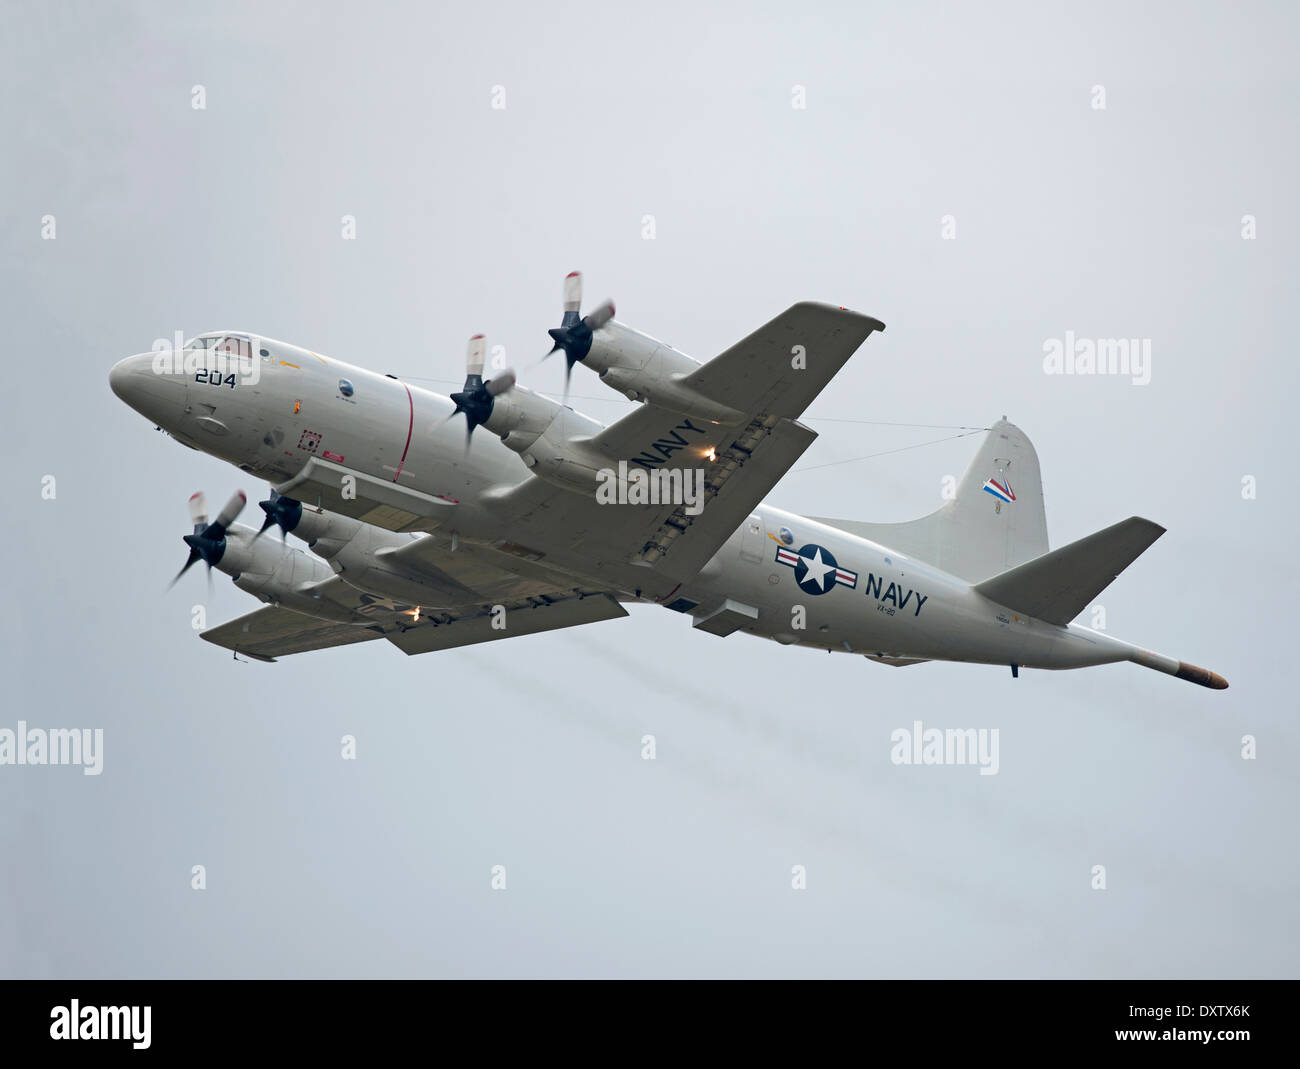 US Navy P-3C Orion Maritime Patrol Aircraft, Canada. SCO 9030. Stock Photo